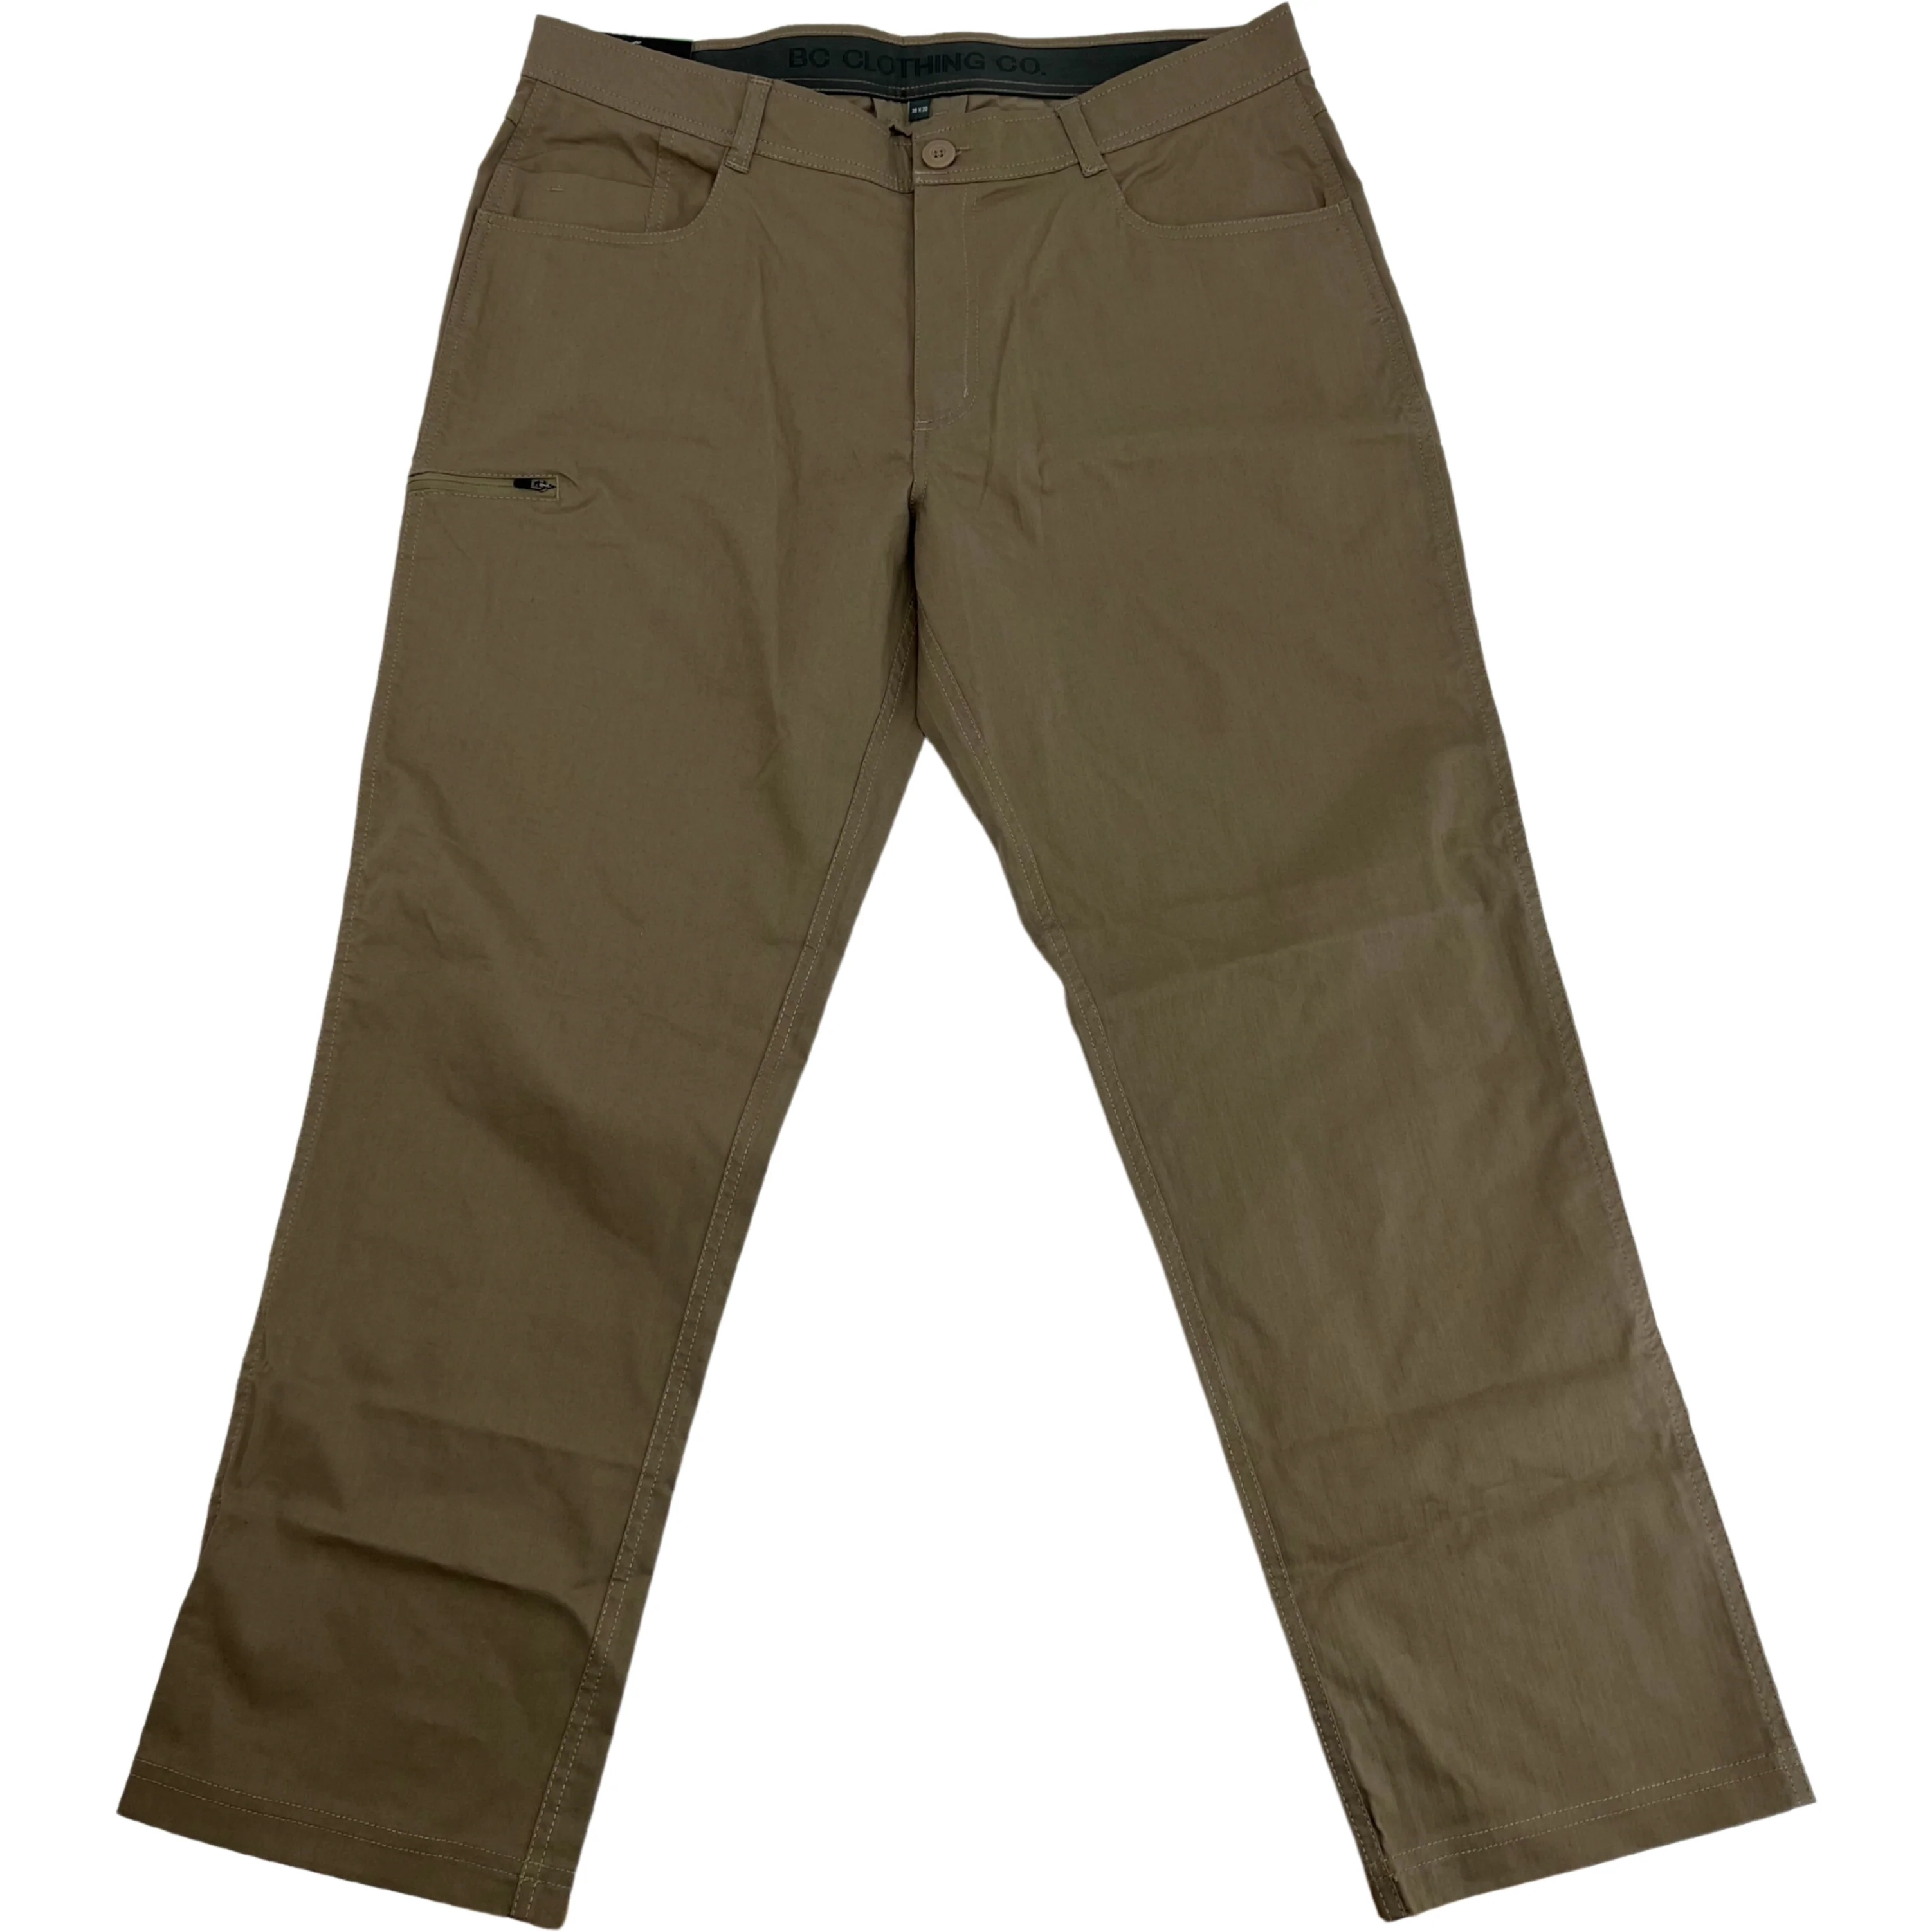 BC Clothing Men's Expedition Pants / Khaki / Size 38 X 30